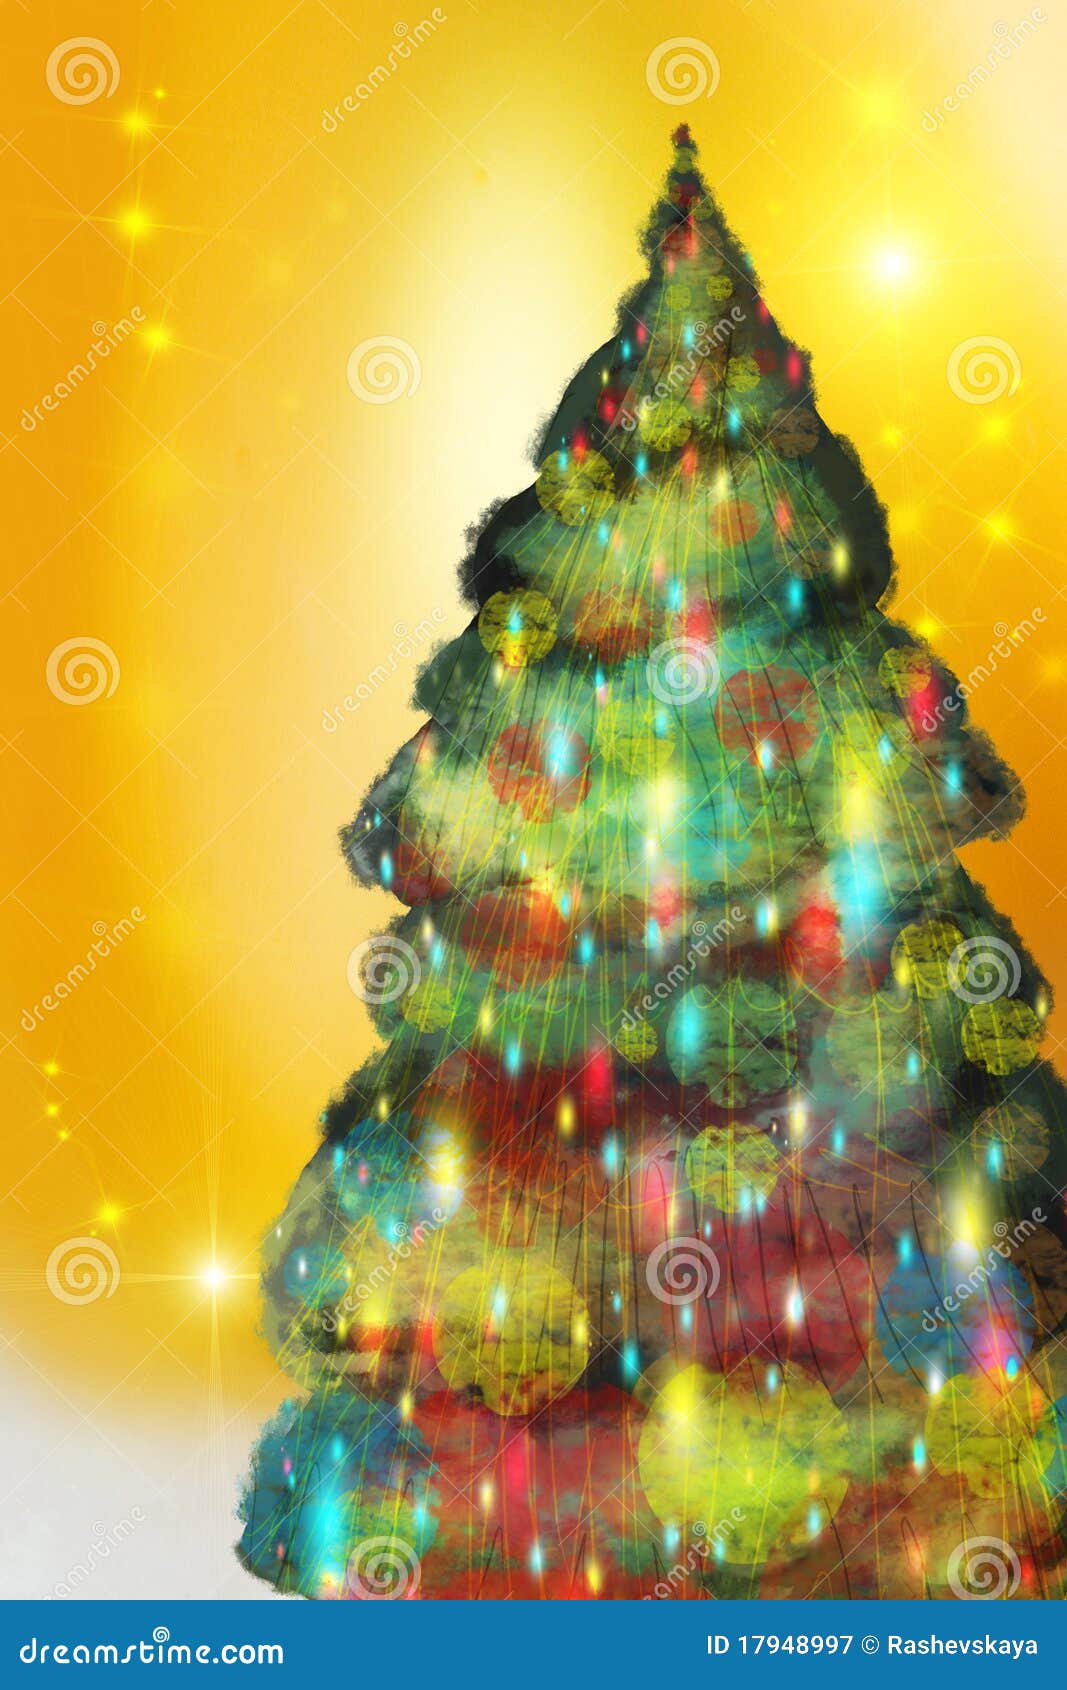 fir-tree on a goldish background